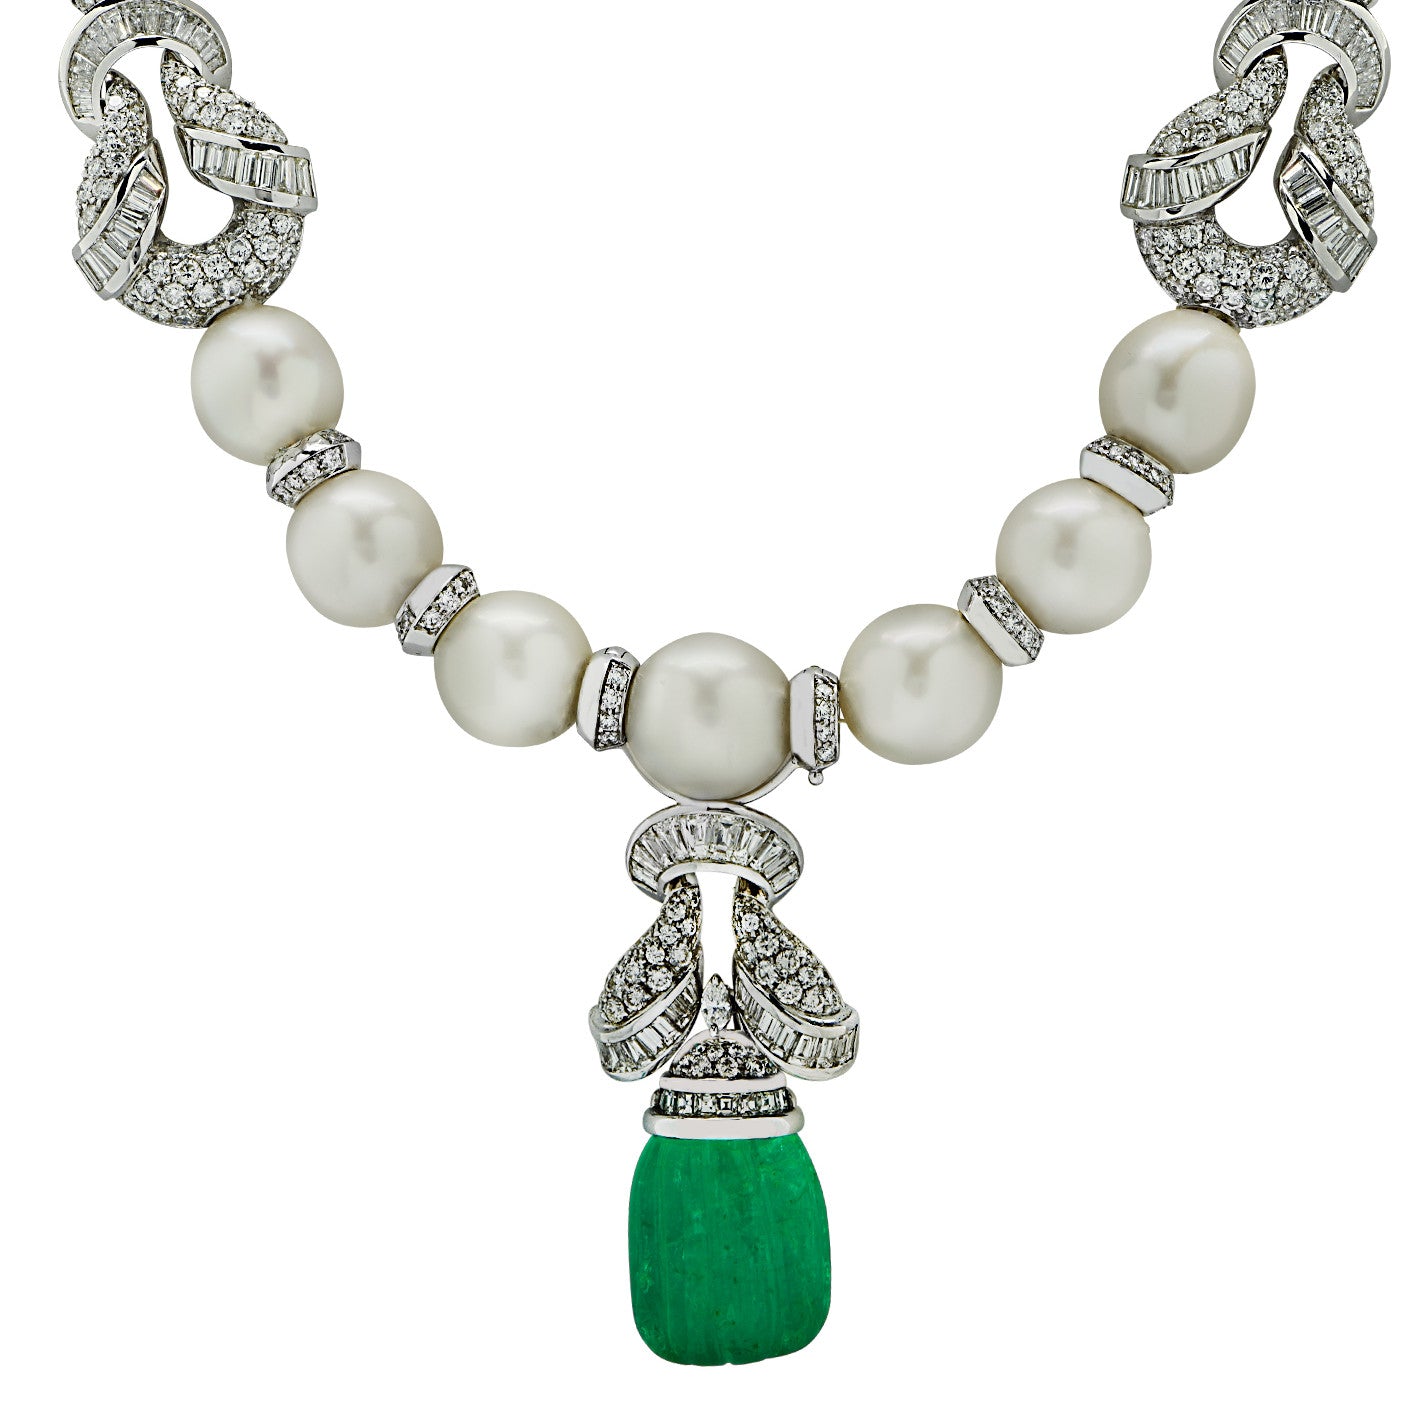 Piranesi Italy 1980s Platinum Emerald, Diamond & Cultured Pearl Necklace close-up details